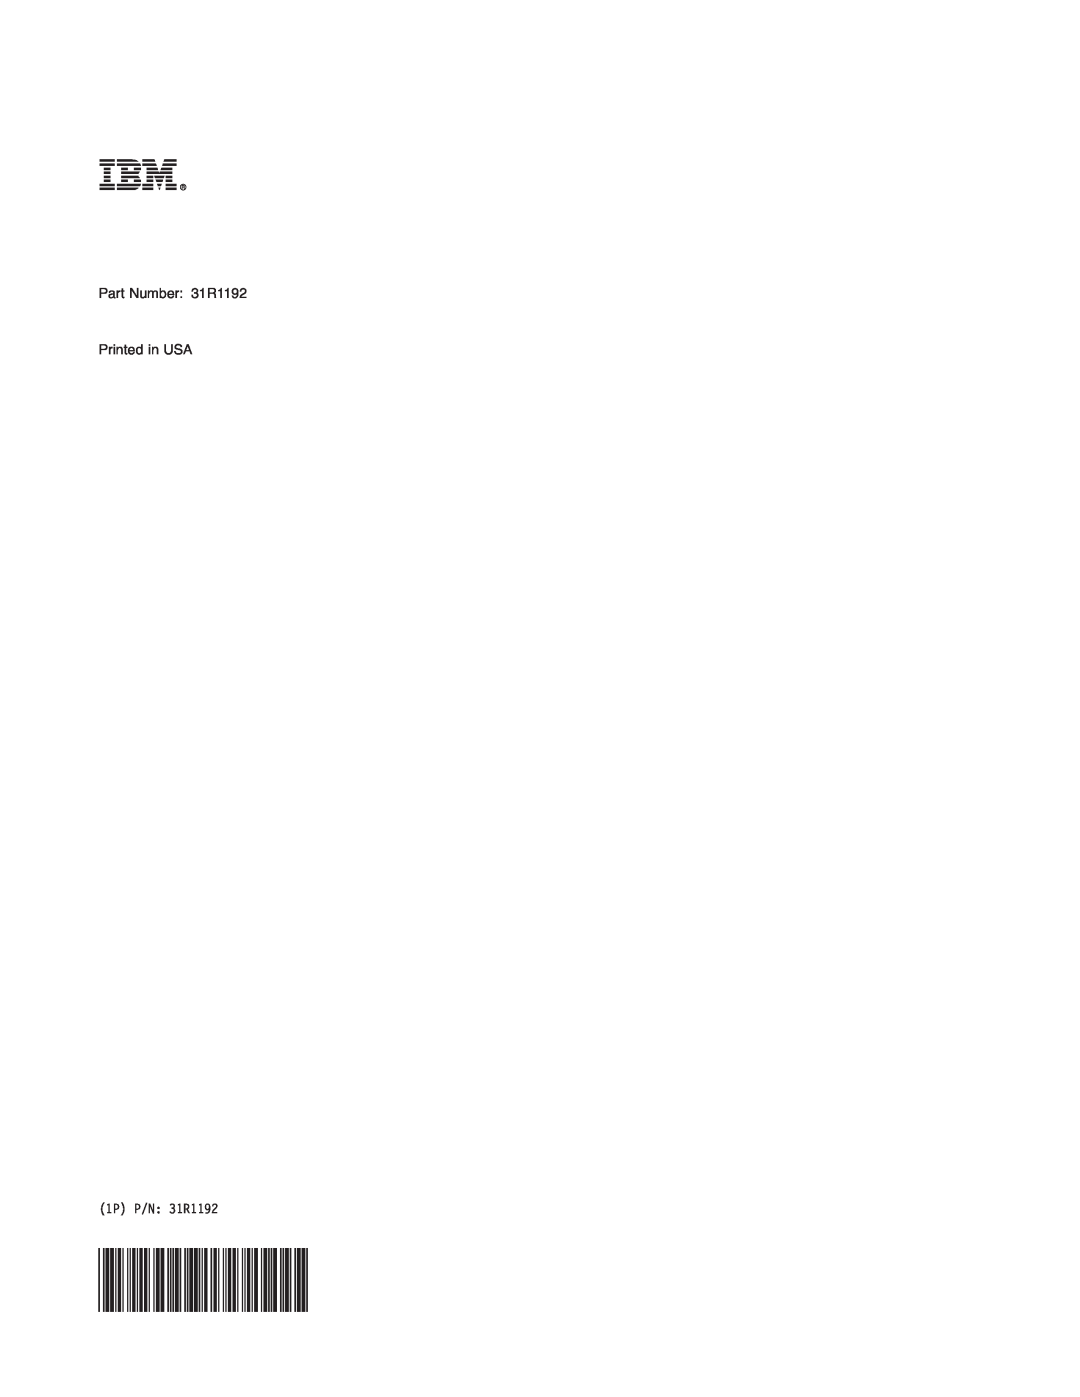 IBM 8840 manual Part Number 31R1192 Printed in USA, 1P P/N 31R1192 